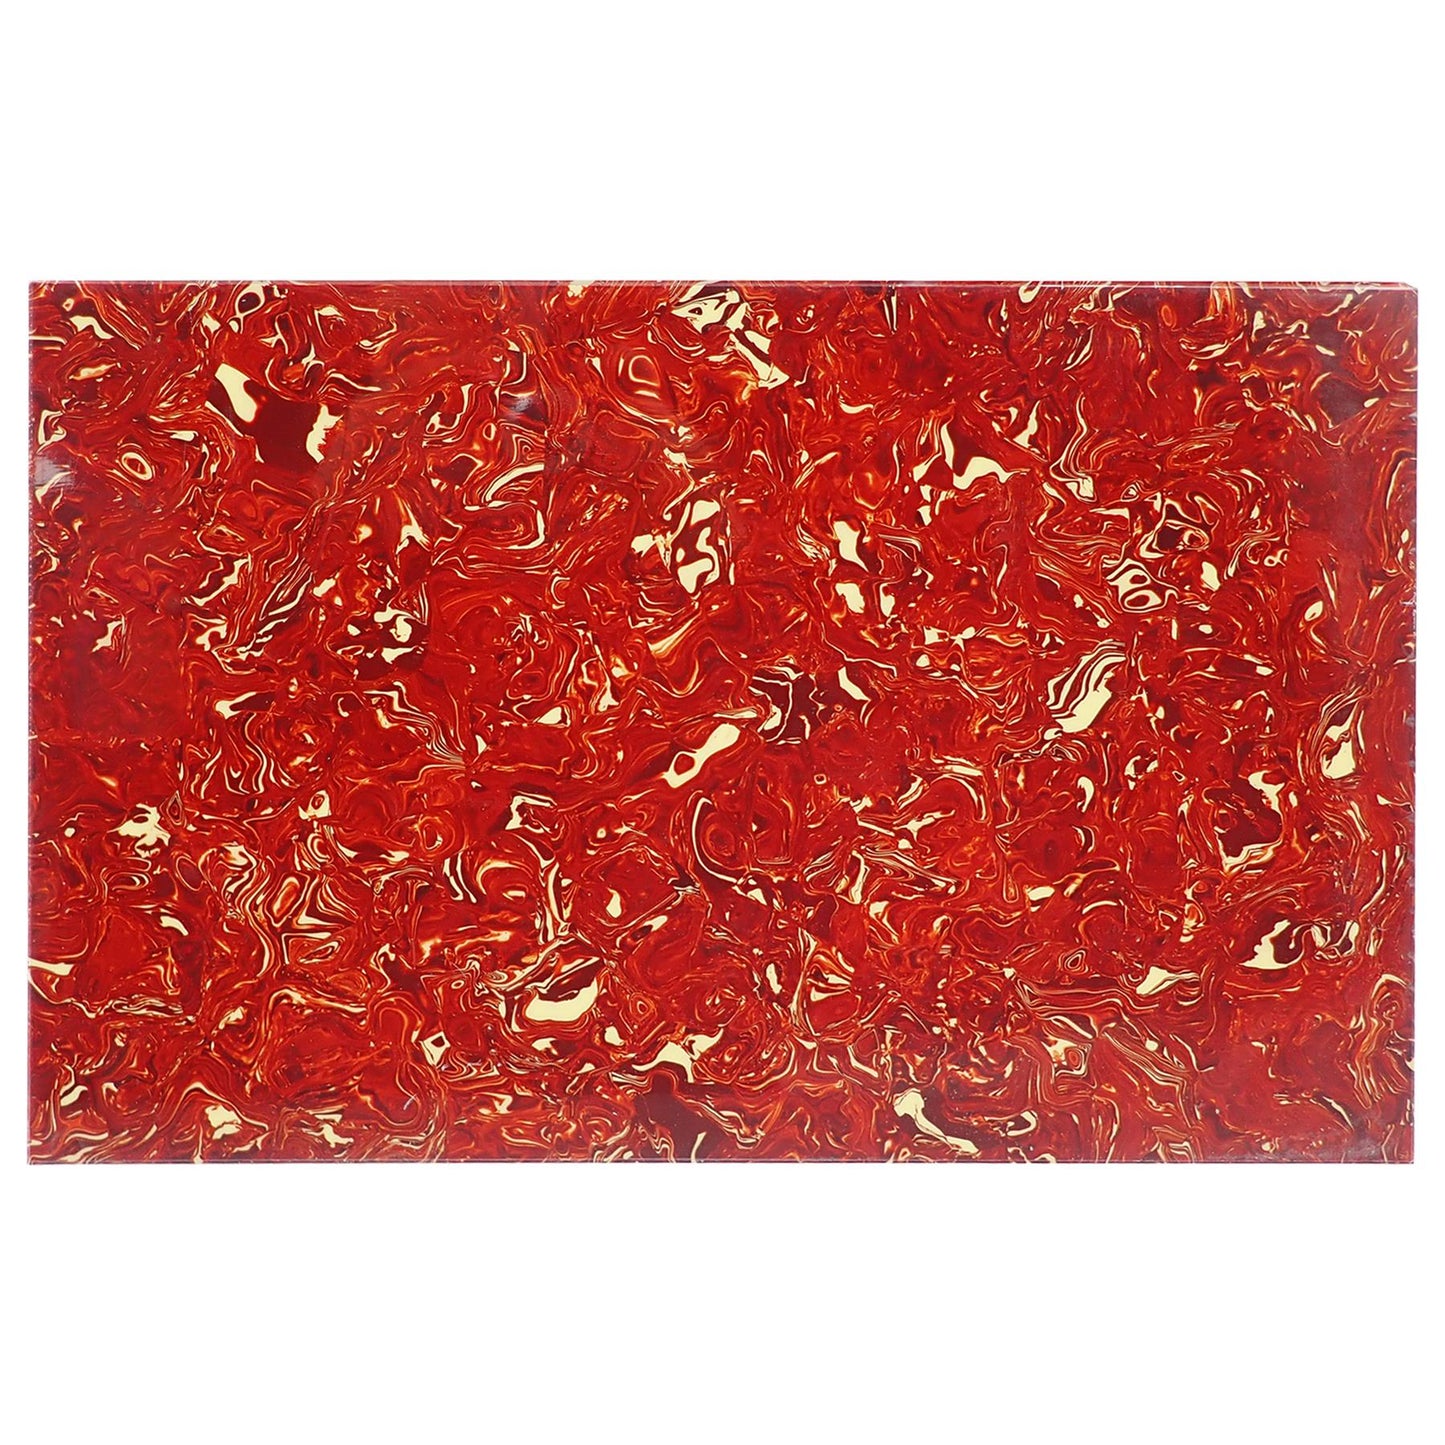 Borderlands Red Dark Tortoiseshell PVC Sheet - 430x290x2.5mm (16.9x11.42x0.1"), 4-Ply